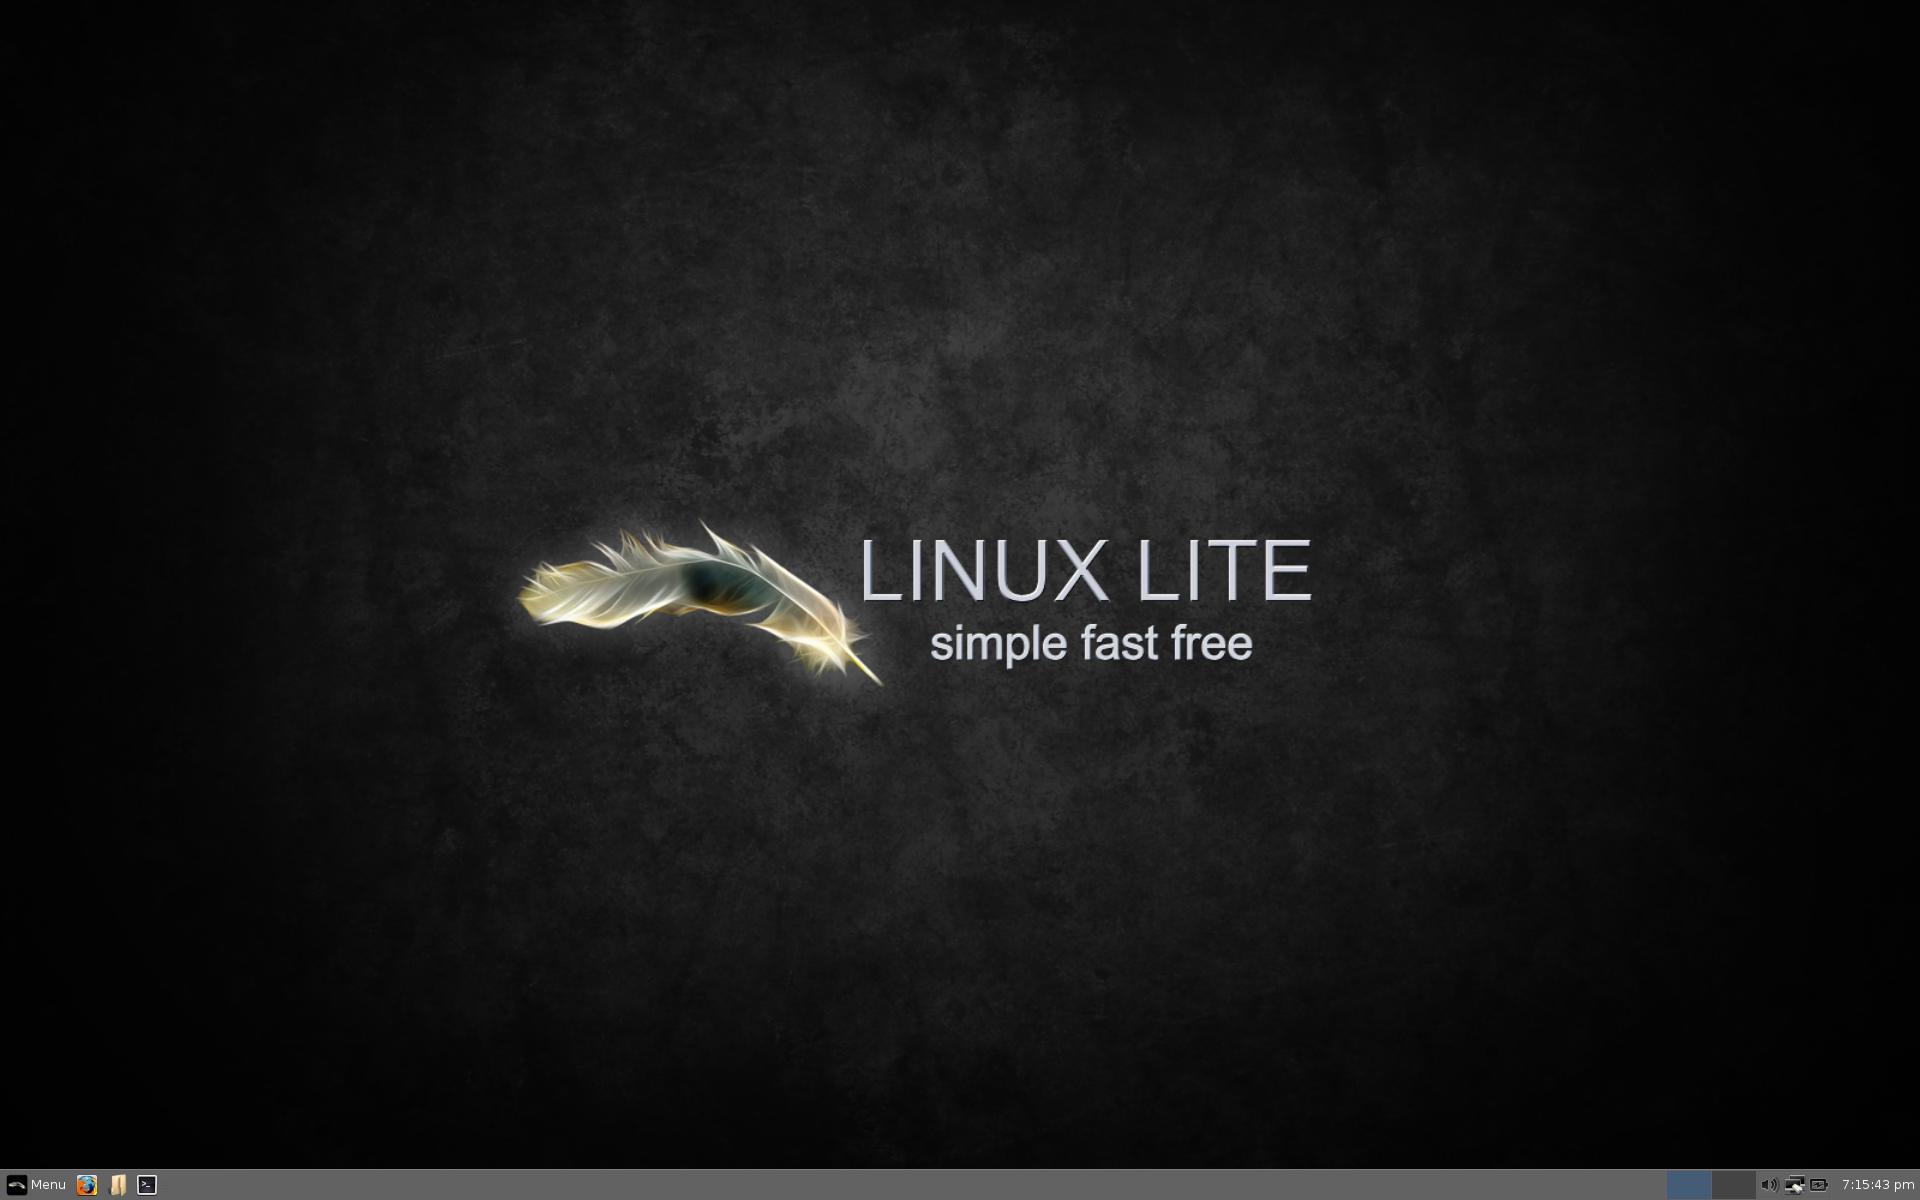 Https linux 1. Linux Light. Ubuntu Lite. Linux эмблема. Linux Lite logo.